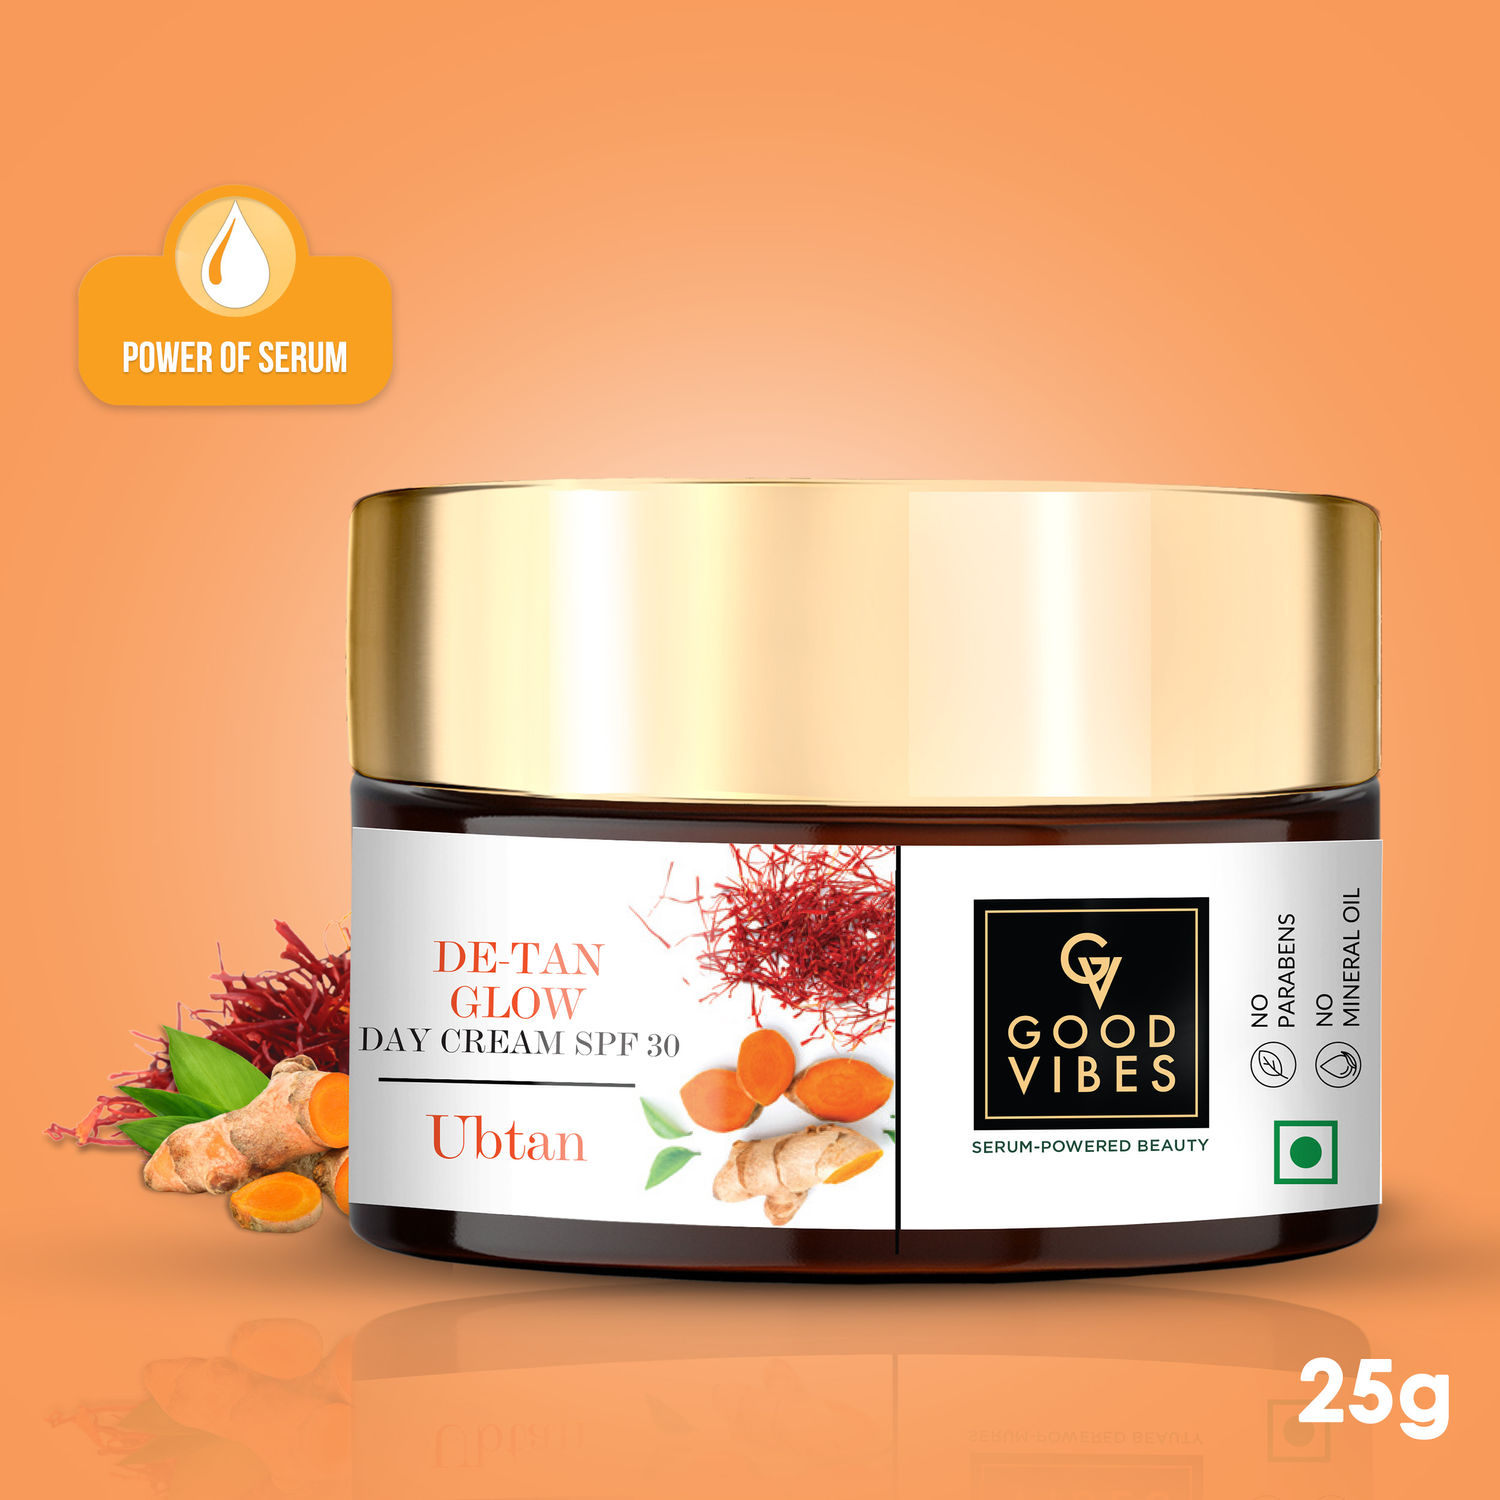 Good Vibes Ubtan De-Tan Glow Day Cream SPF30 with Power of Serum (25g)